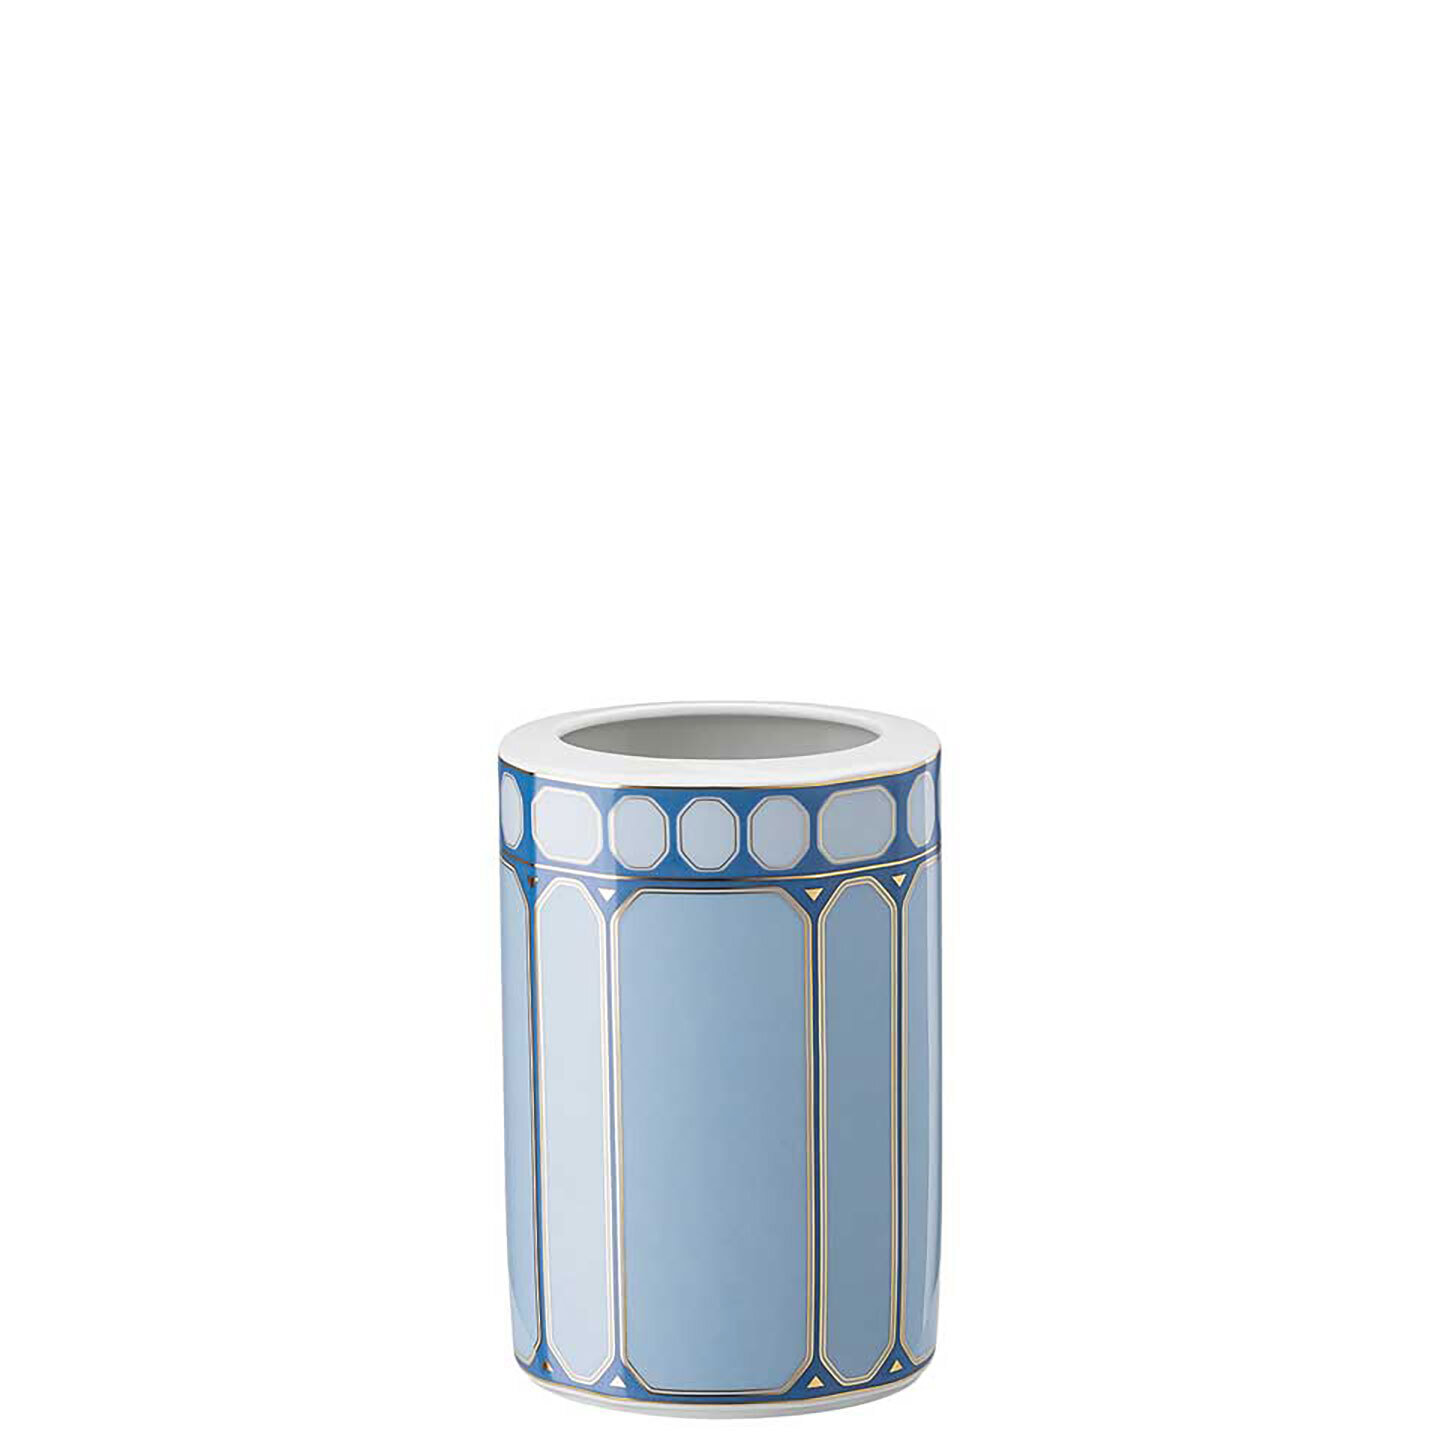 Rosenthal Swarovski Signum Vase 6 Inch Azure Blue 10570-426351-26015